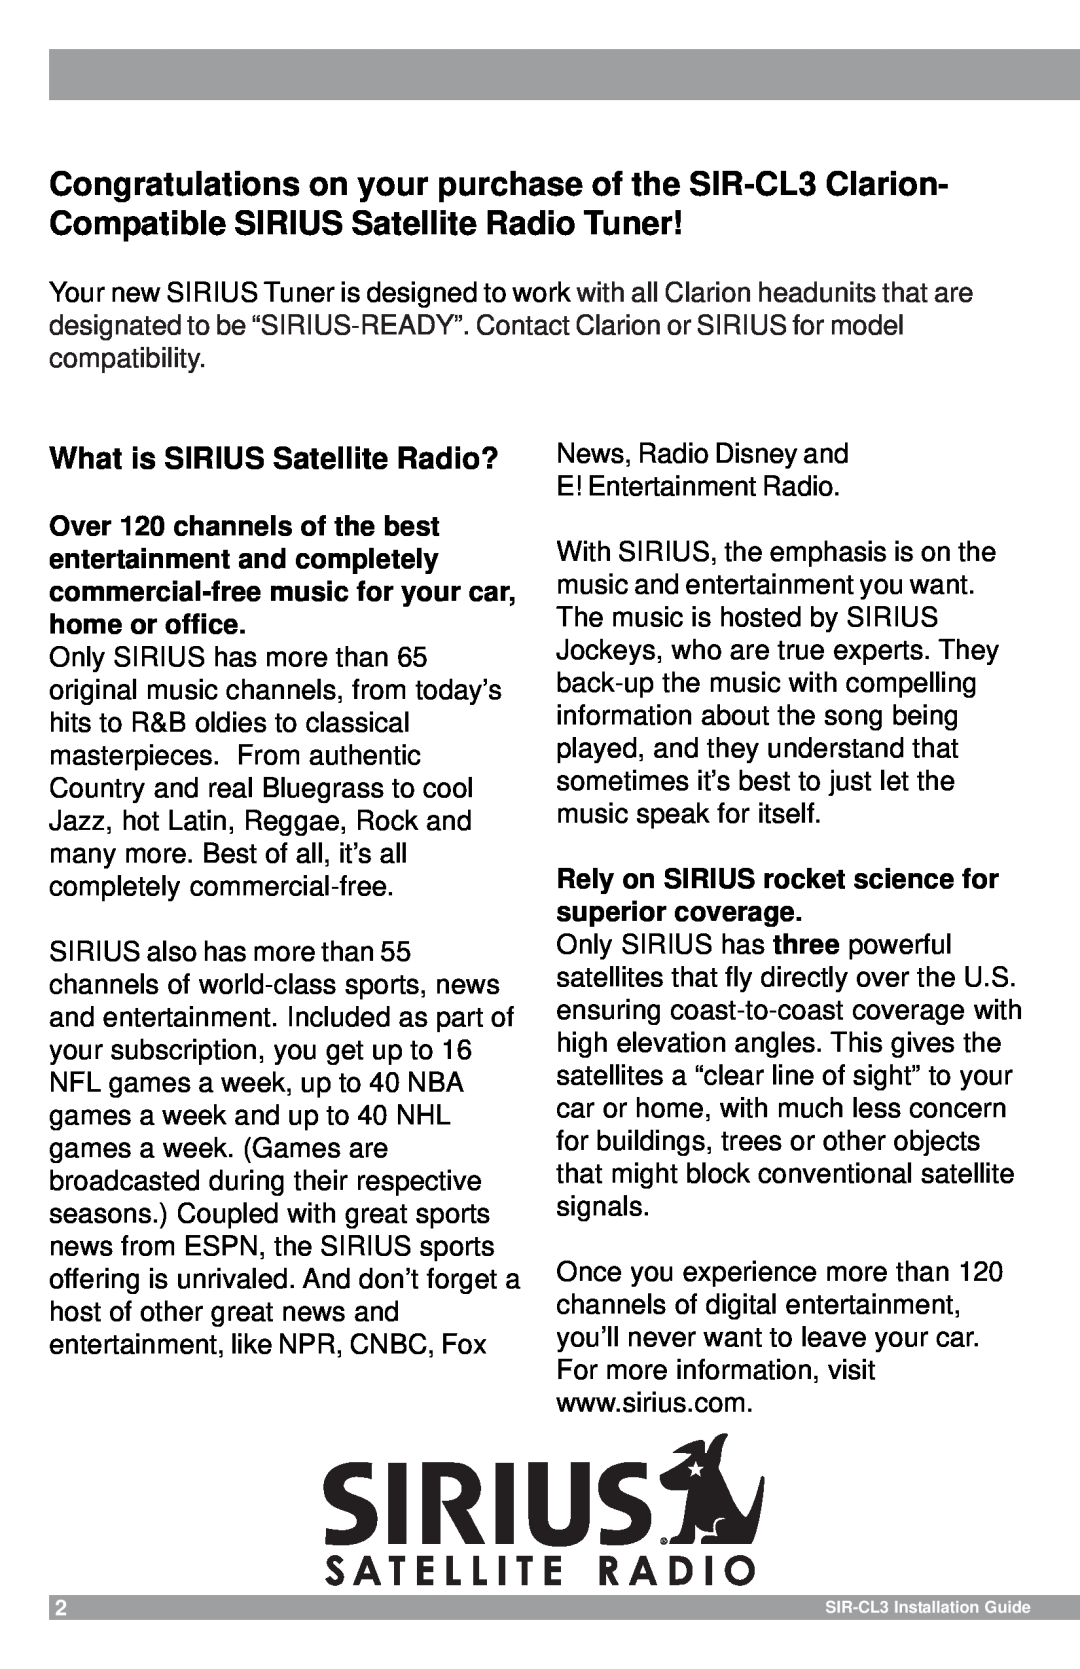 Sirius Satellite Radio SIR-CL3 manual What is SIRIUS Satellite Radio? 